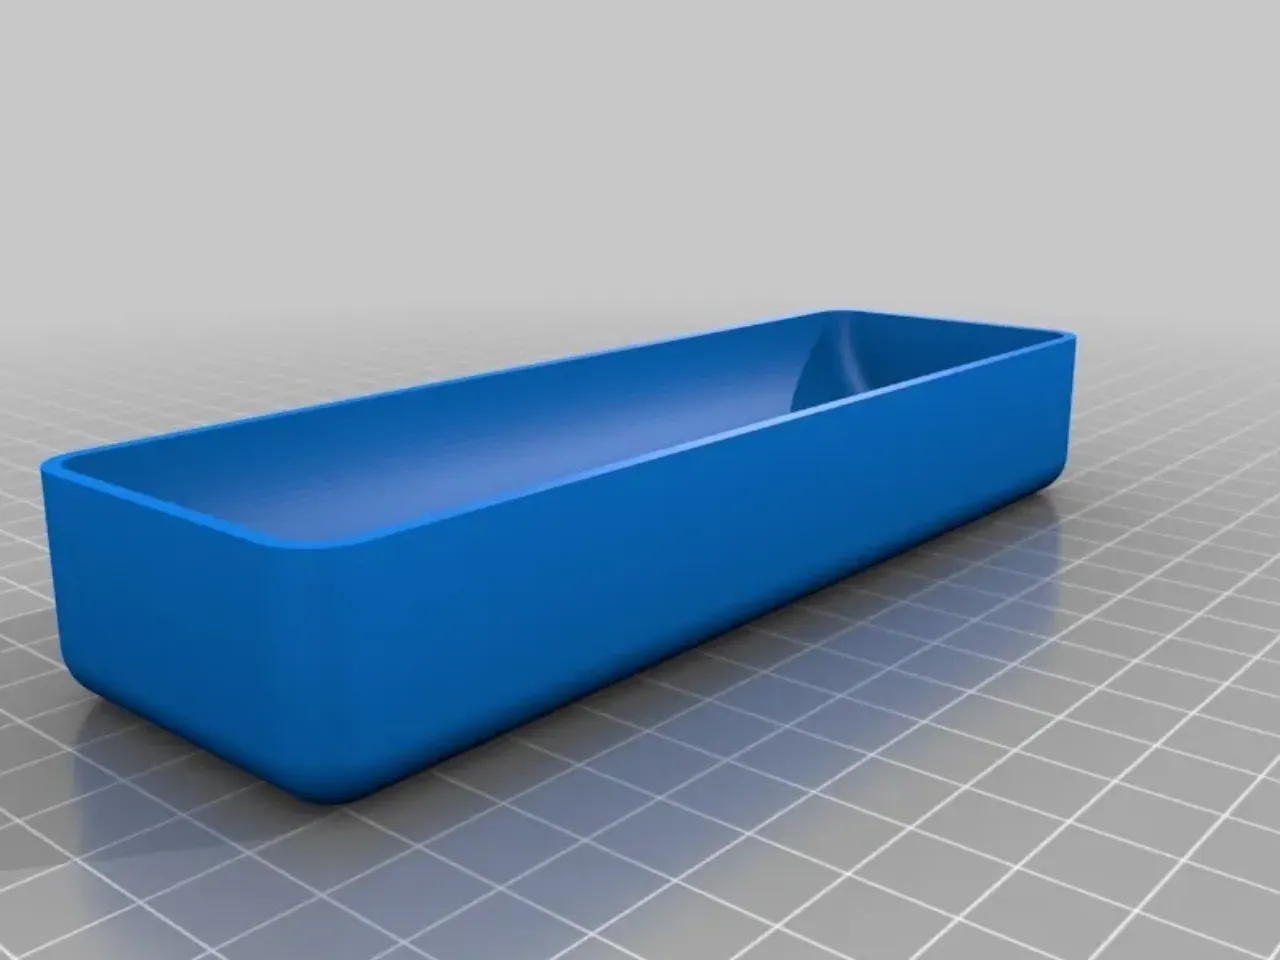 STL file Incurvo Large Toolbox Plier Organizer 3D-print model